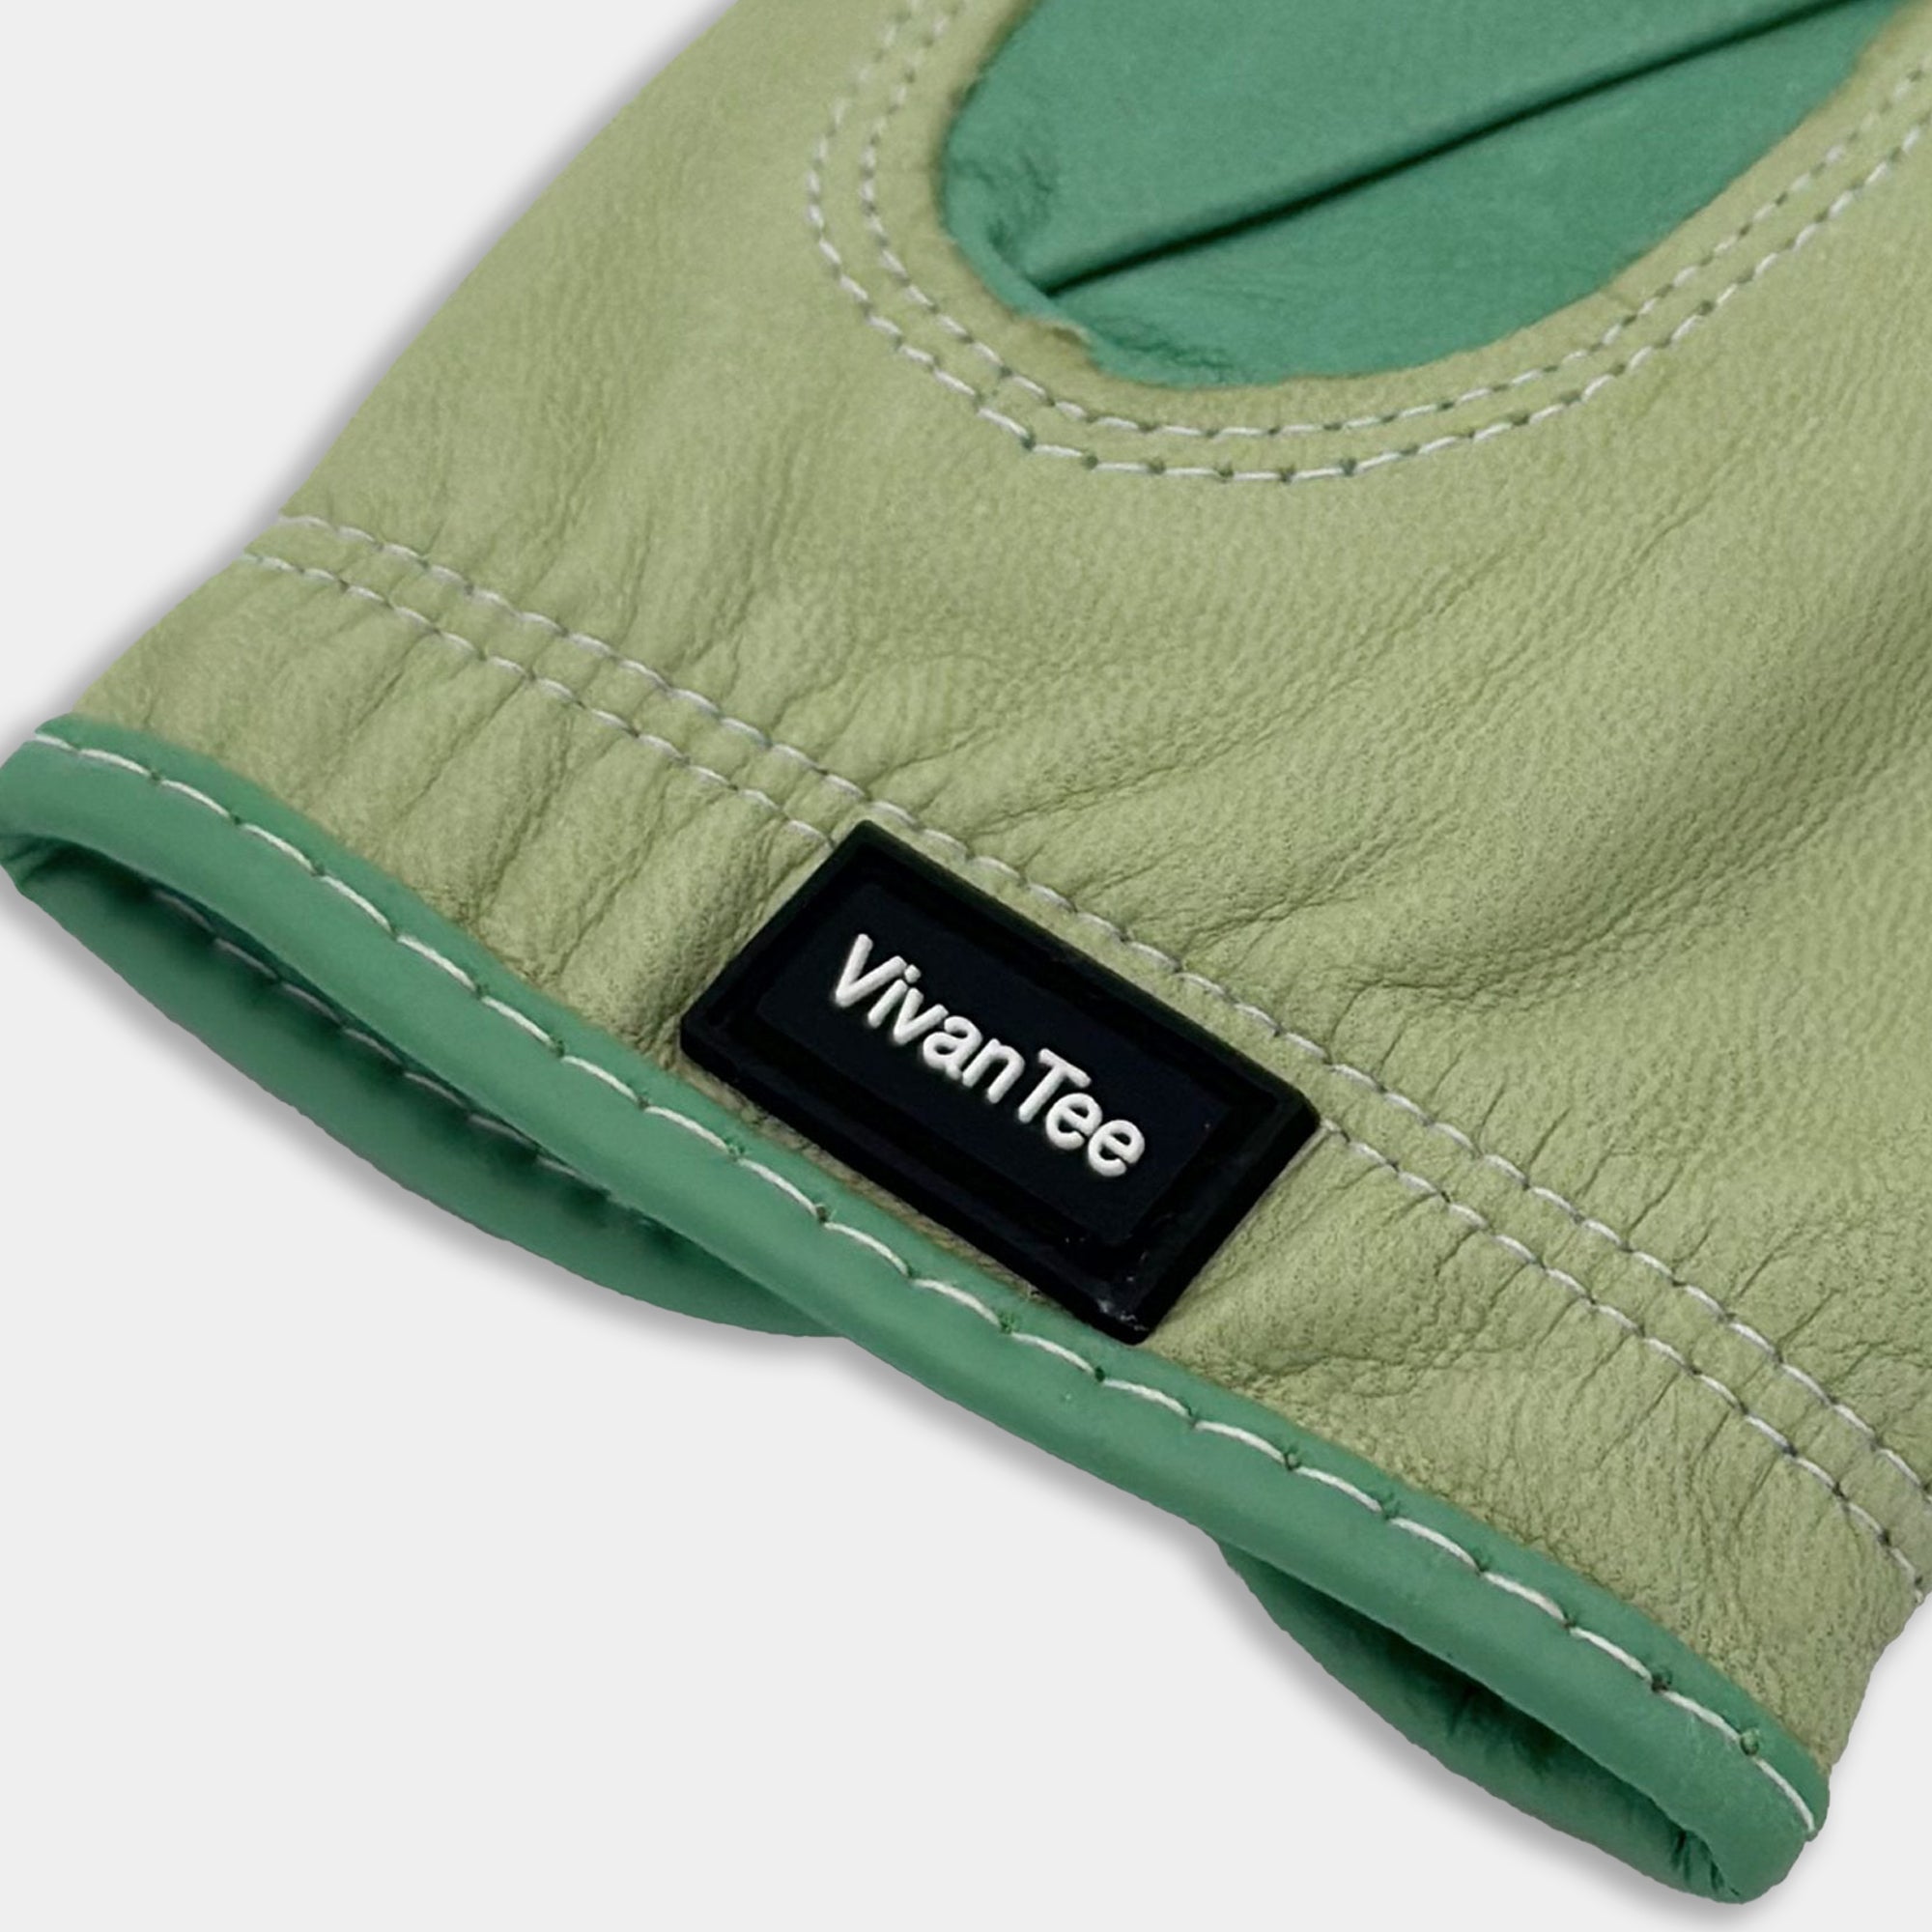 Close up of VivanTee pull tab on mint green golf glove